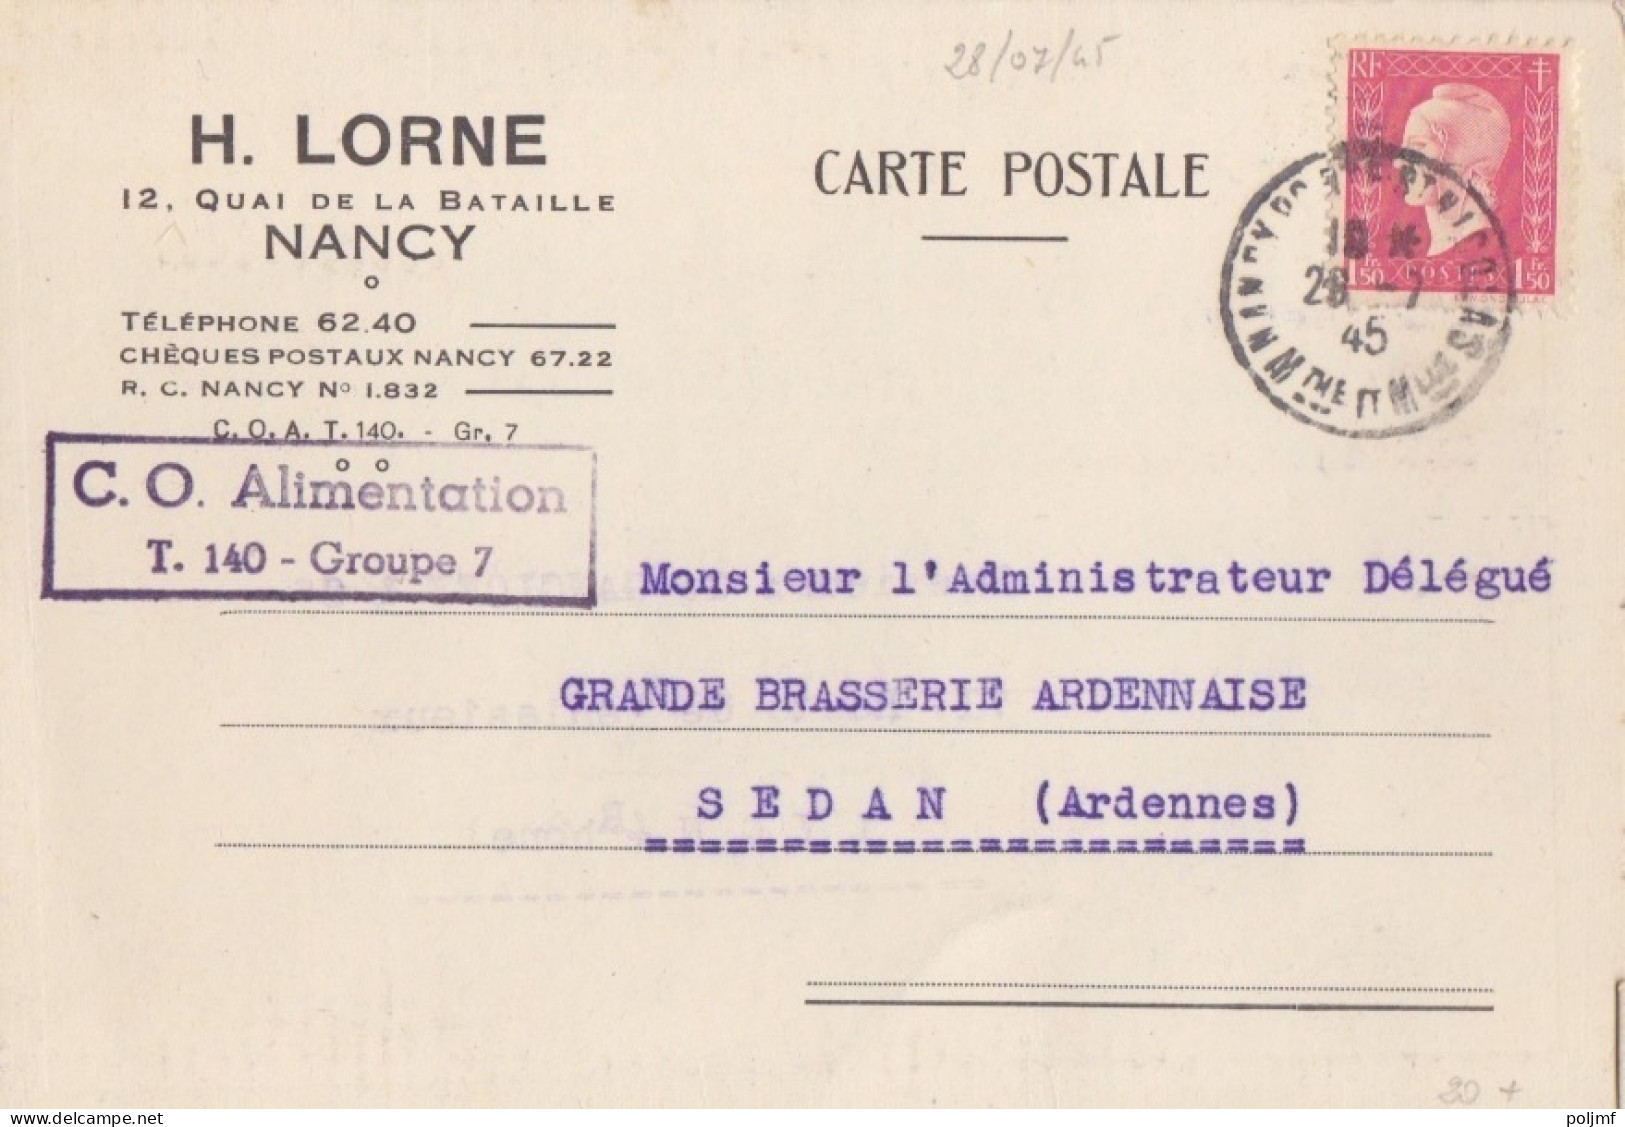 4 CP-Lettre (H. Lorne) Obl. Nancy Pte St Nicolas Du 28/7/45 Au 26/11/45 Sur 1f50 Dulac Rose N° 691 (Tarif Du 1/3/45) - 1944-45 Marianna Di Dulac